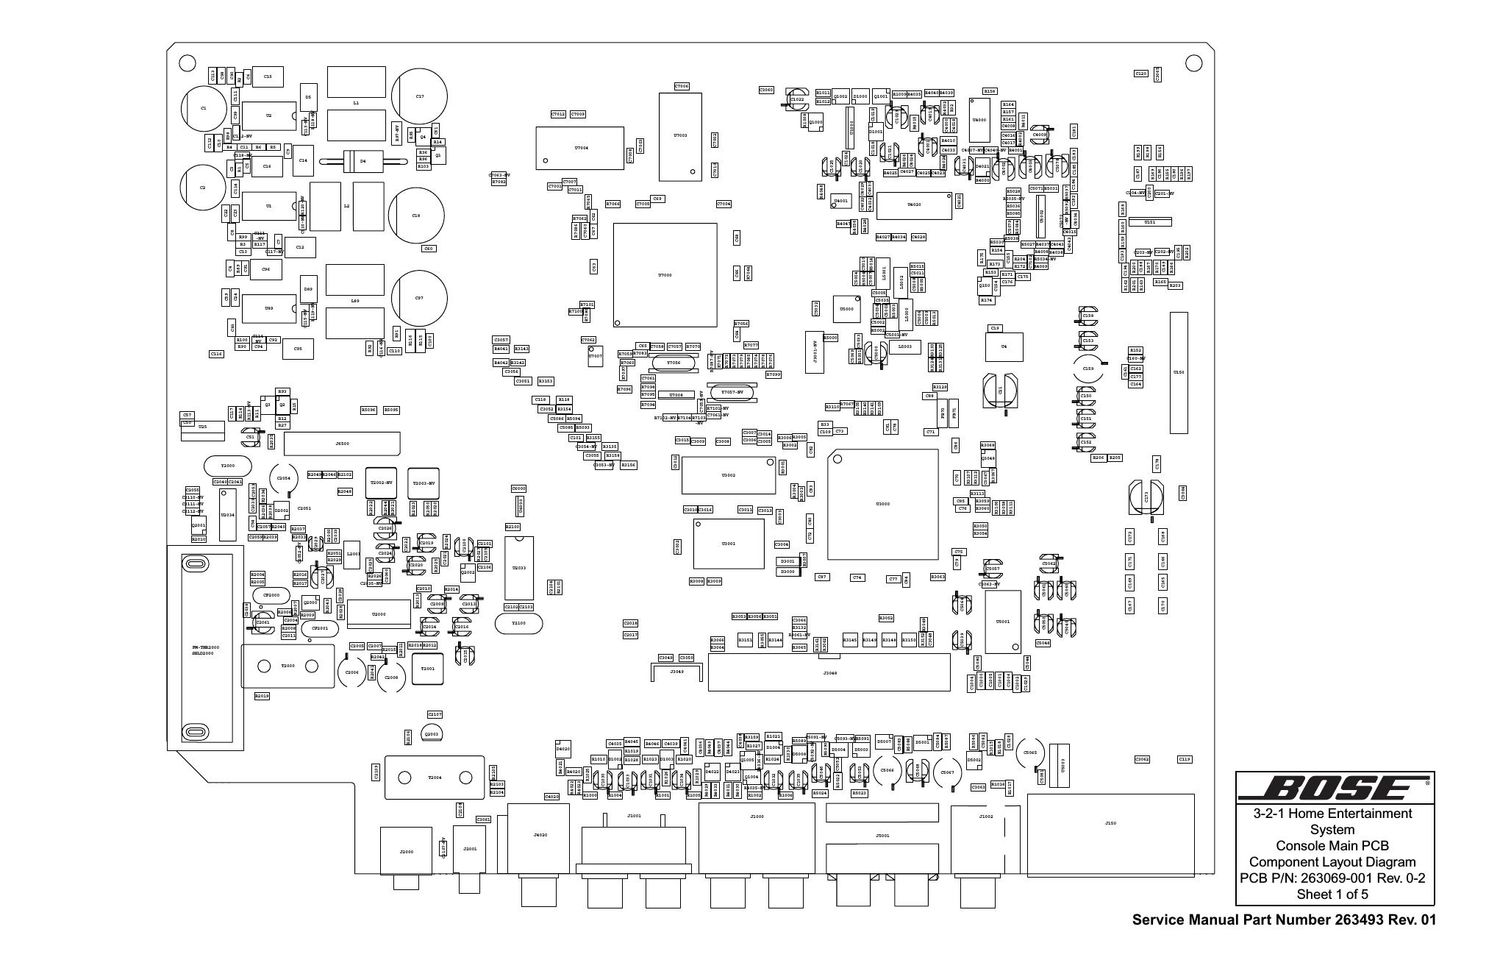 bose 321 main pcb layout sheet